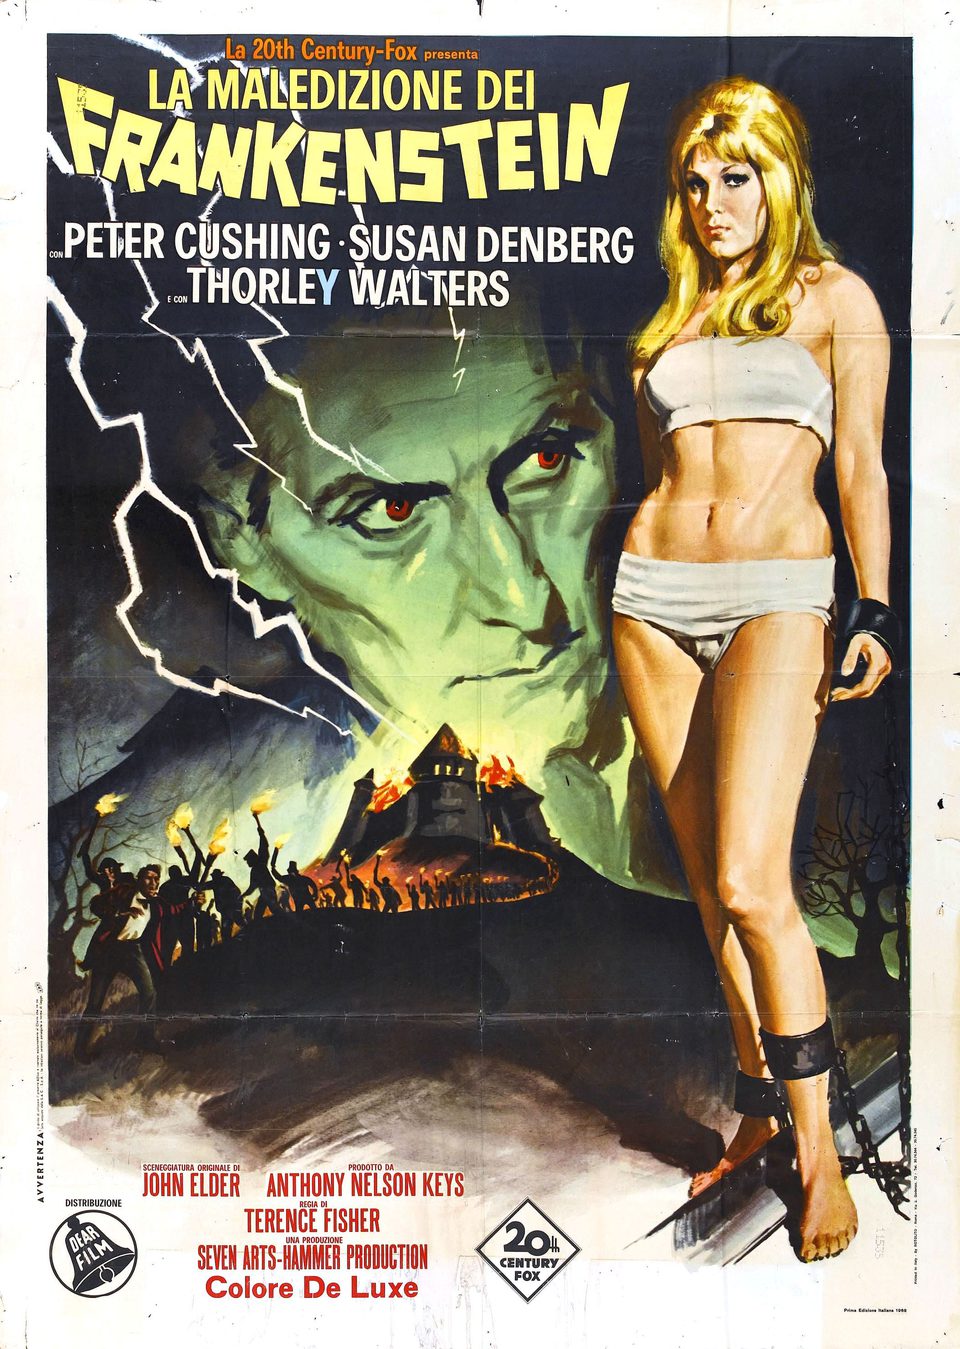 Poster of Frankenstein Created Woman - Frankenstein creó a la mujer